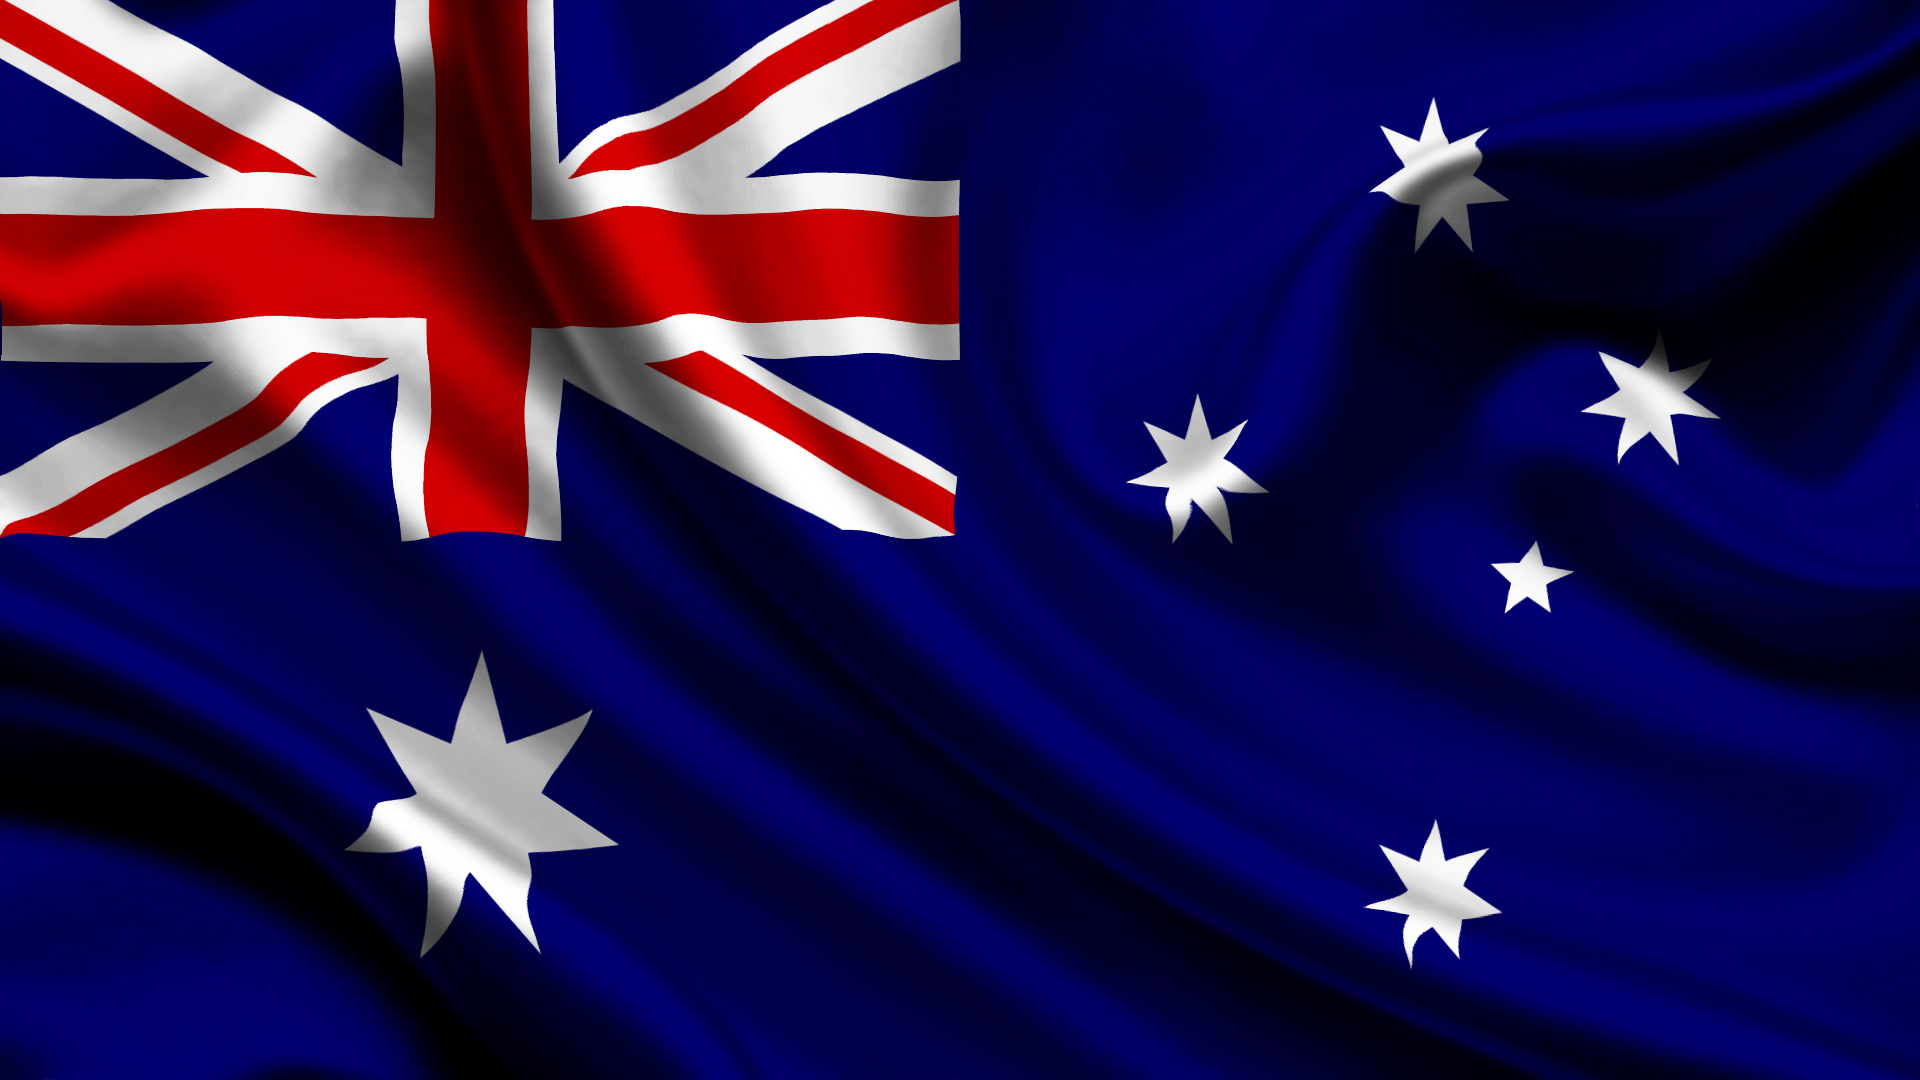 Australia Flag Wallpaper, High Definition, High Quality, Widescreen